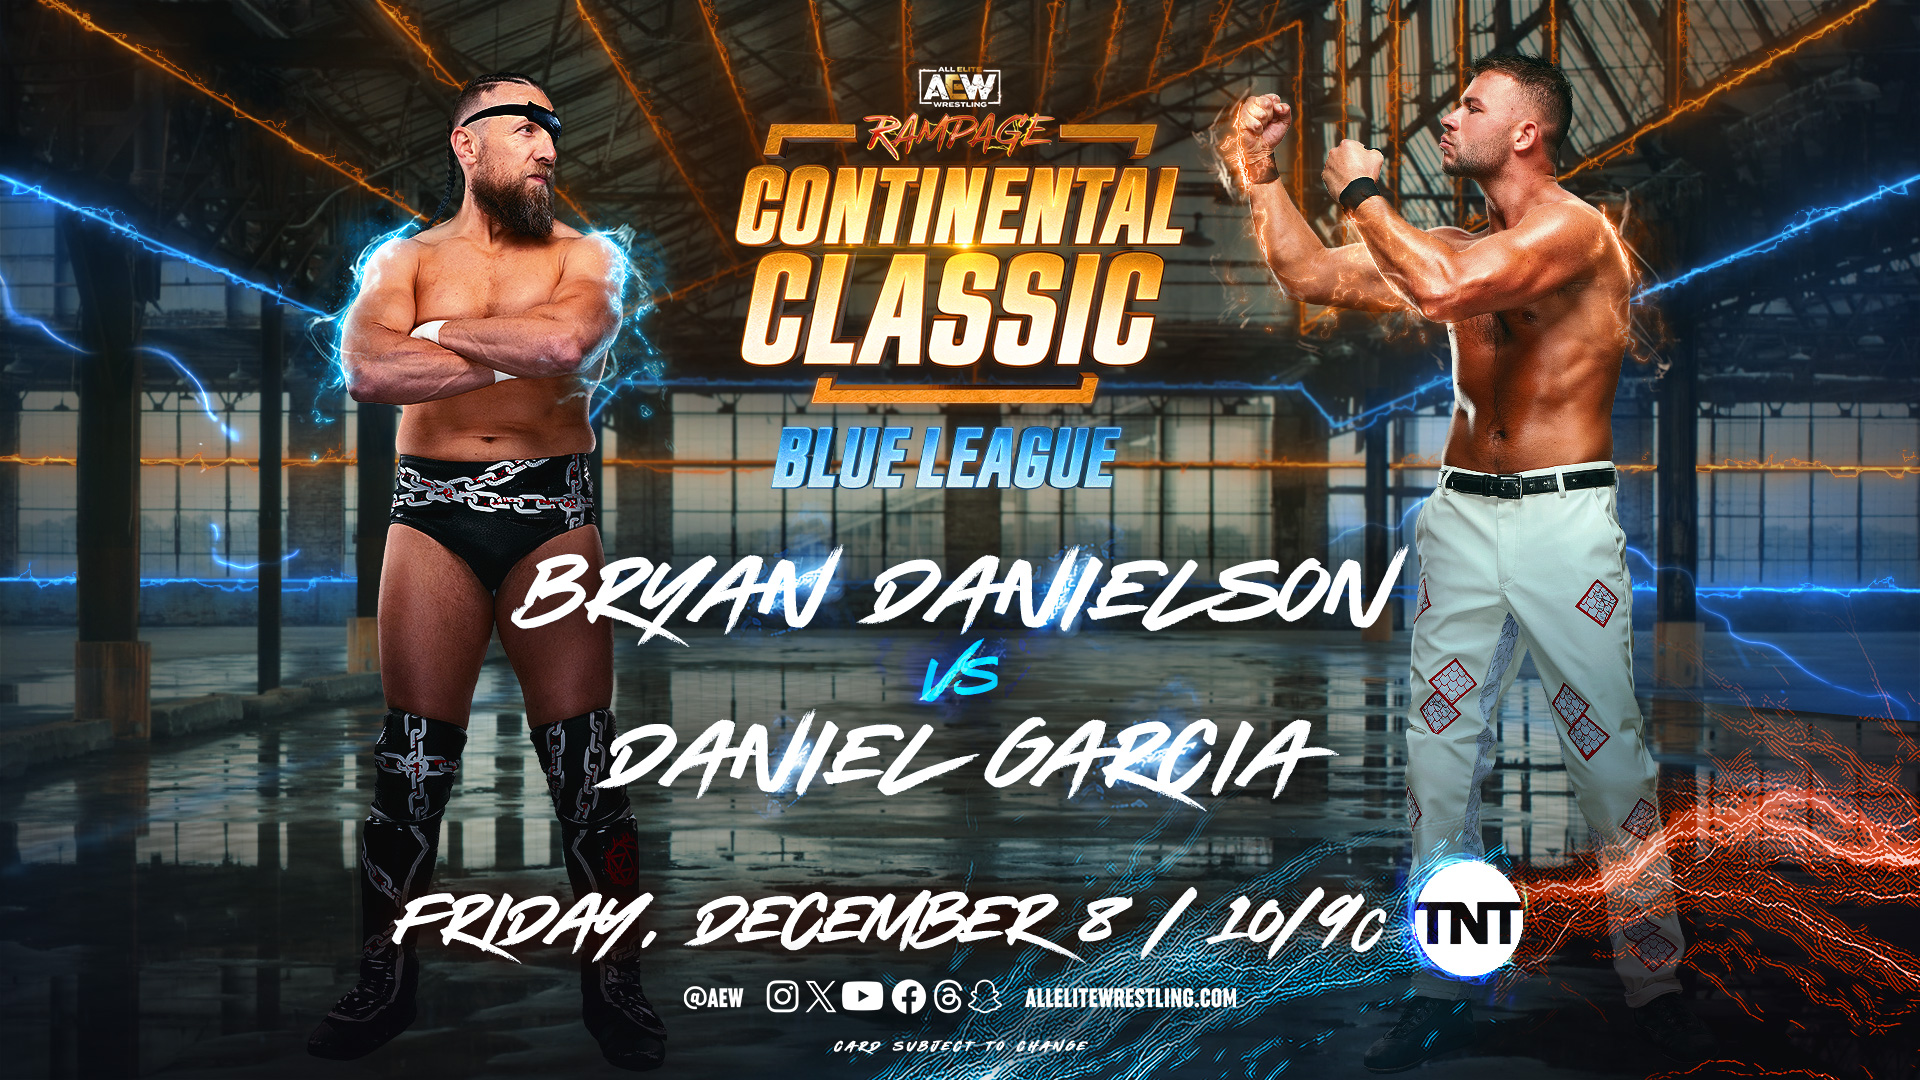 AEW Rampage match graphic featuring Bryan Danielson and Daniel Garcia.